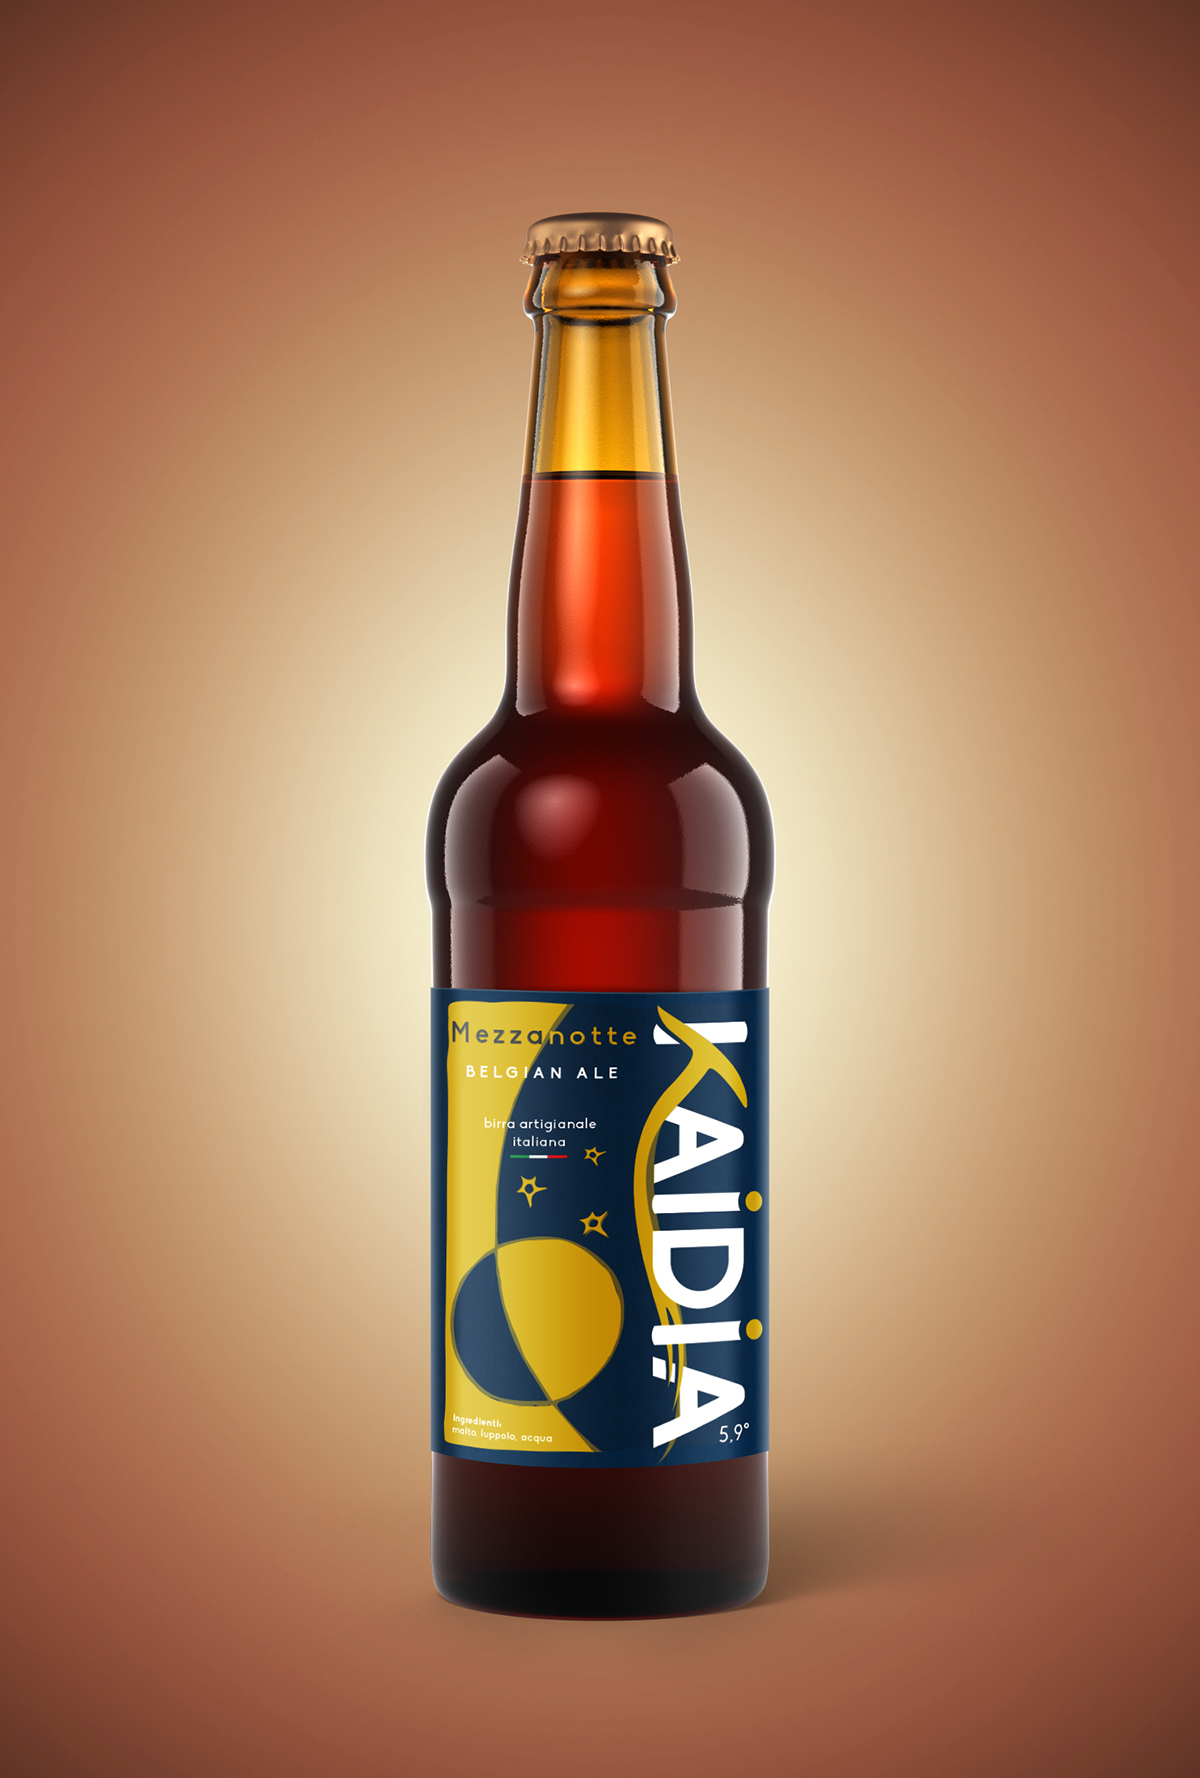 Kaidia beer label design